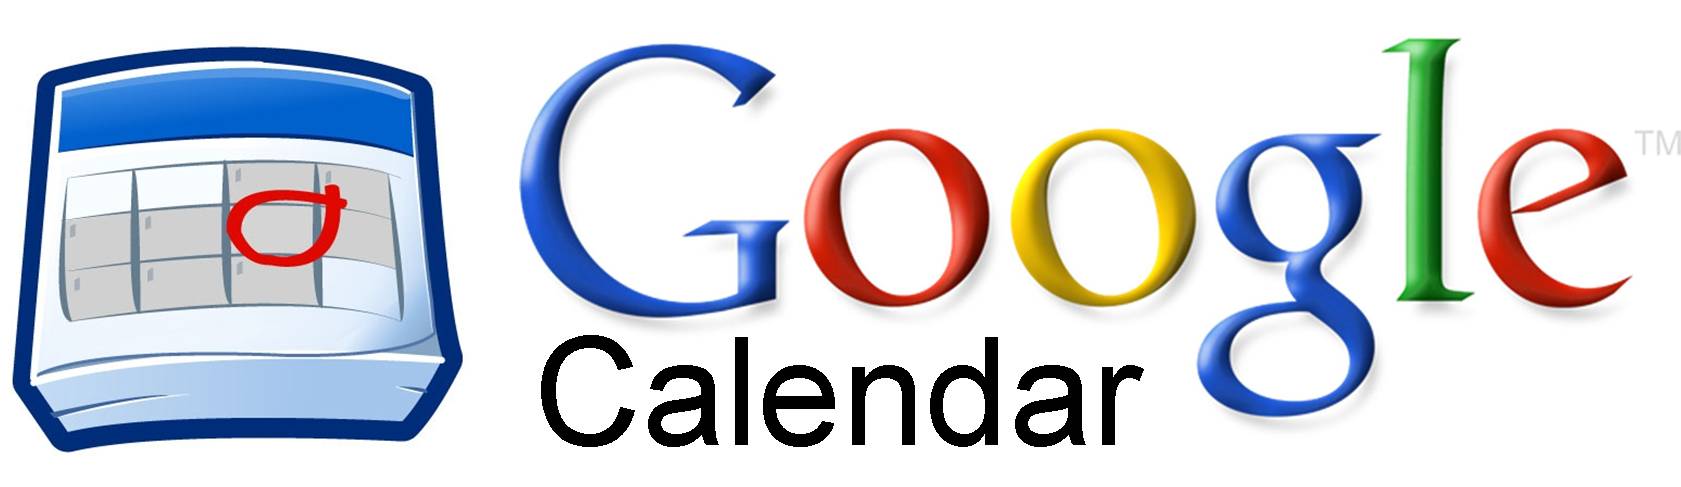 аналог гугл календаря